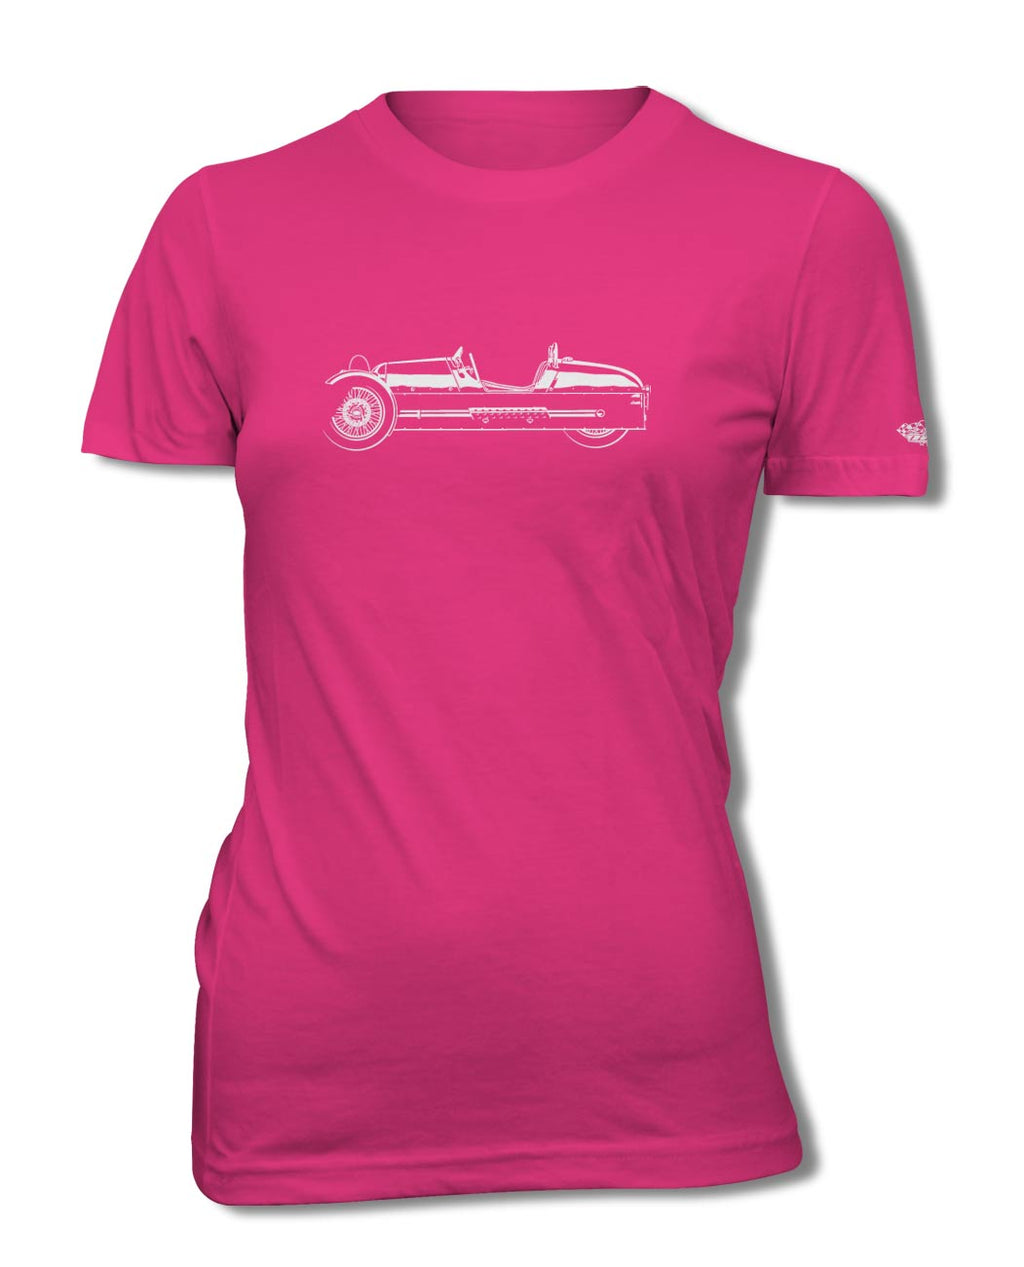 Morgan Three-Wheeler Aero Super Sport T-Shirt - Women - Side View